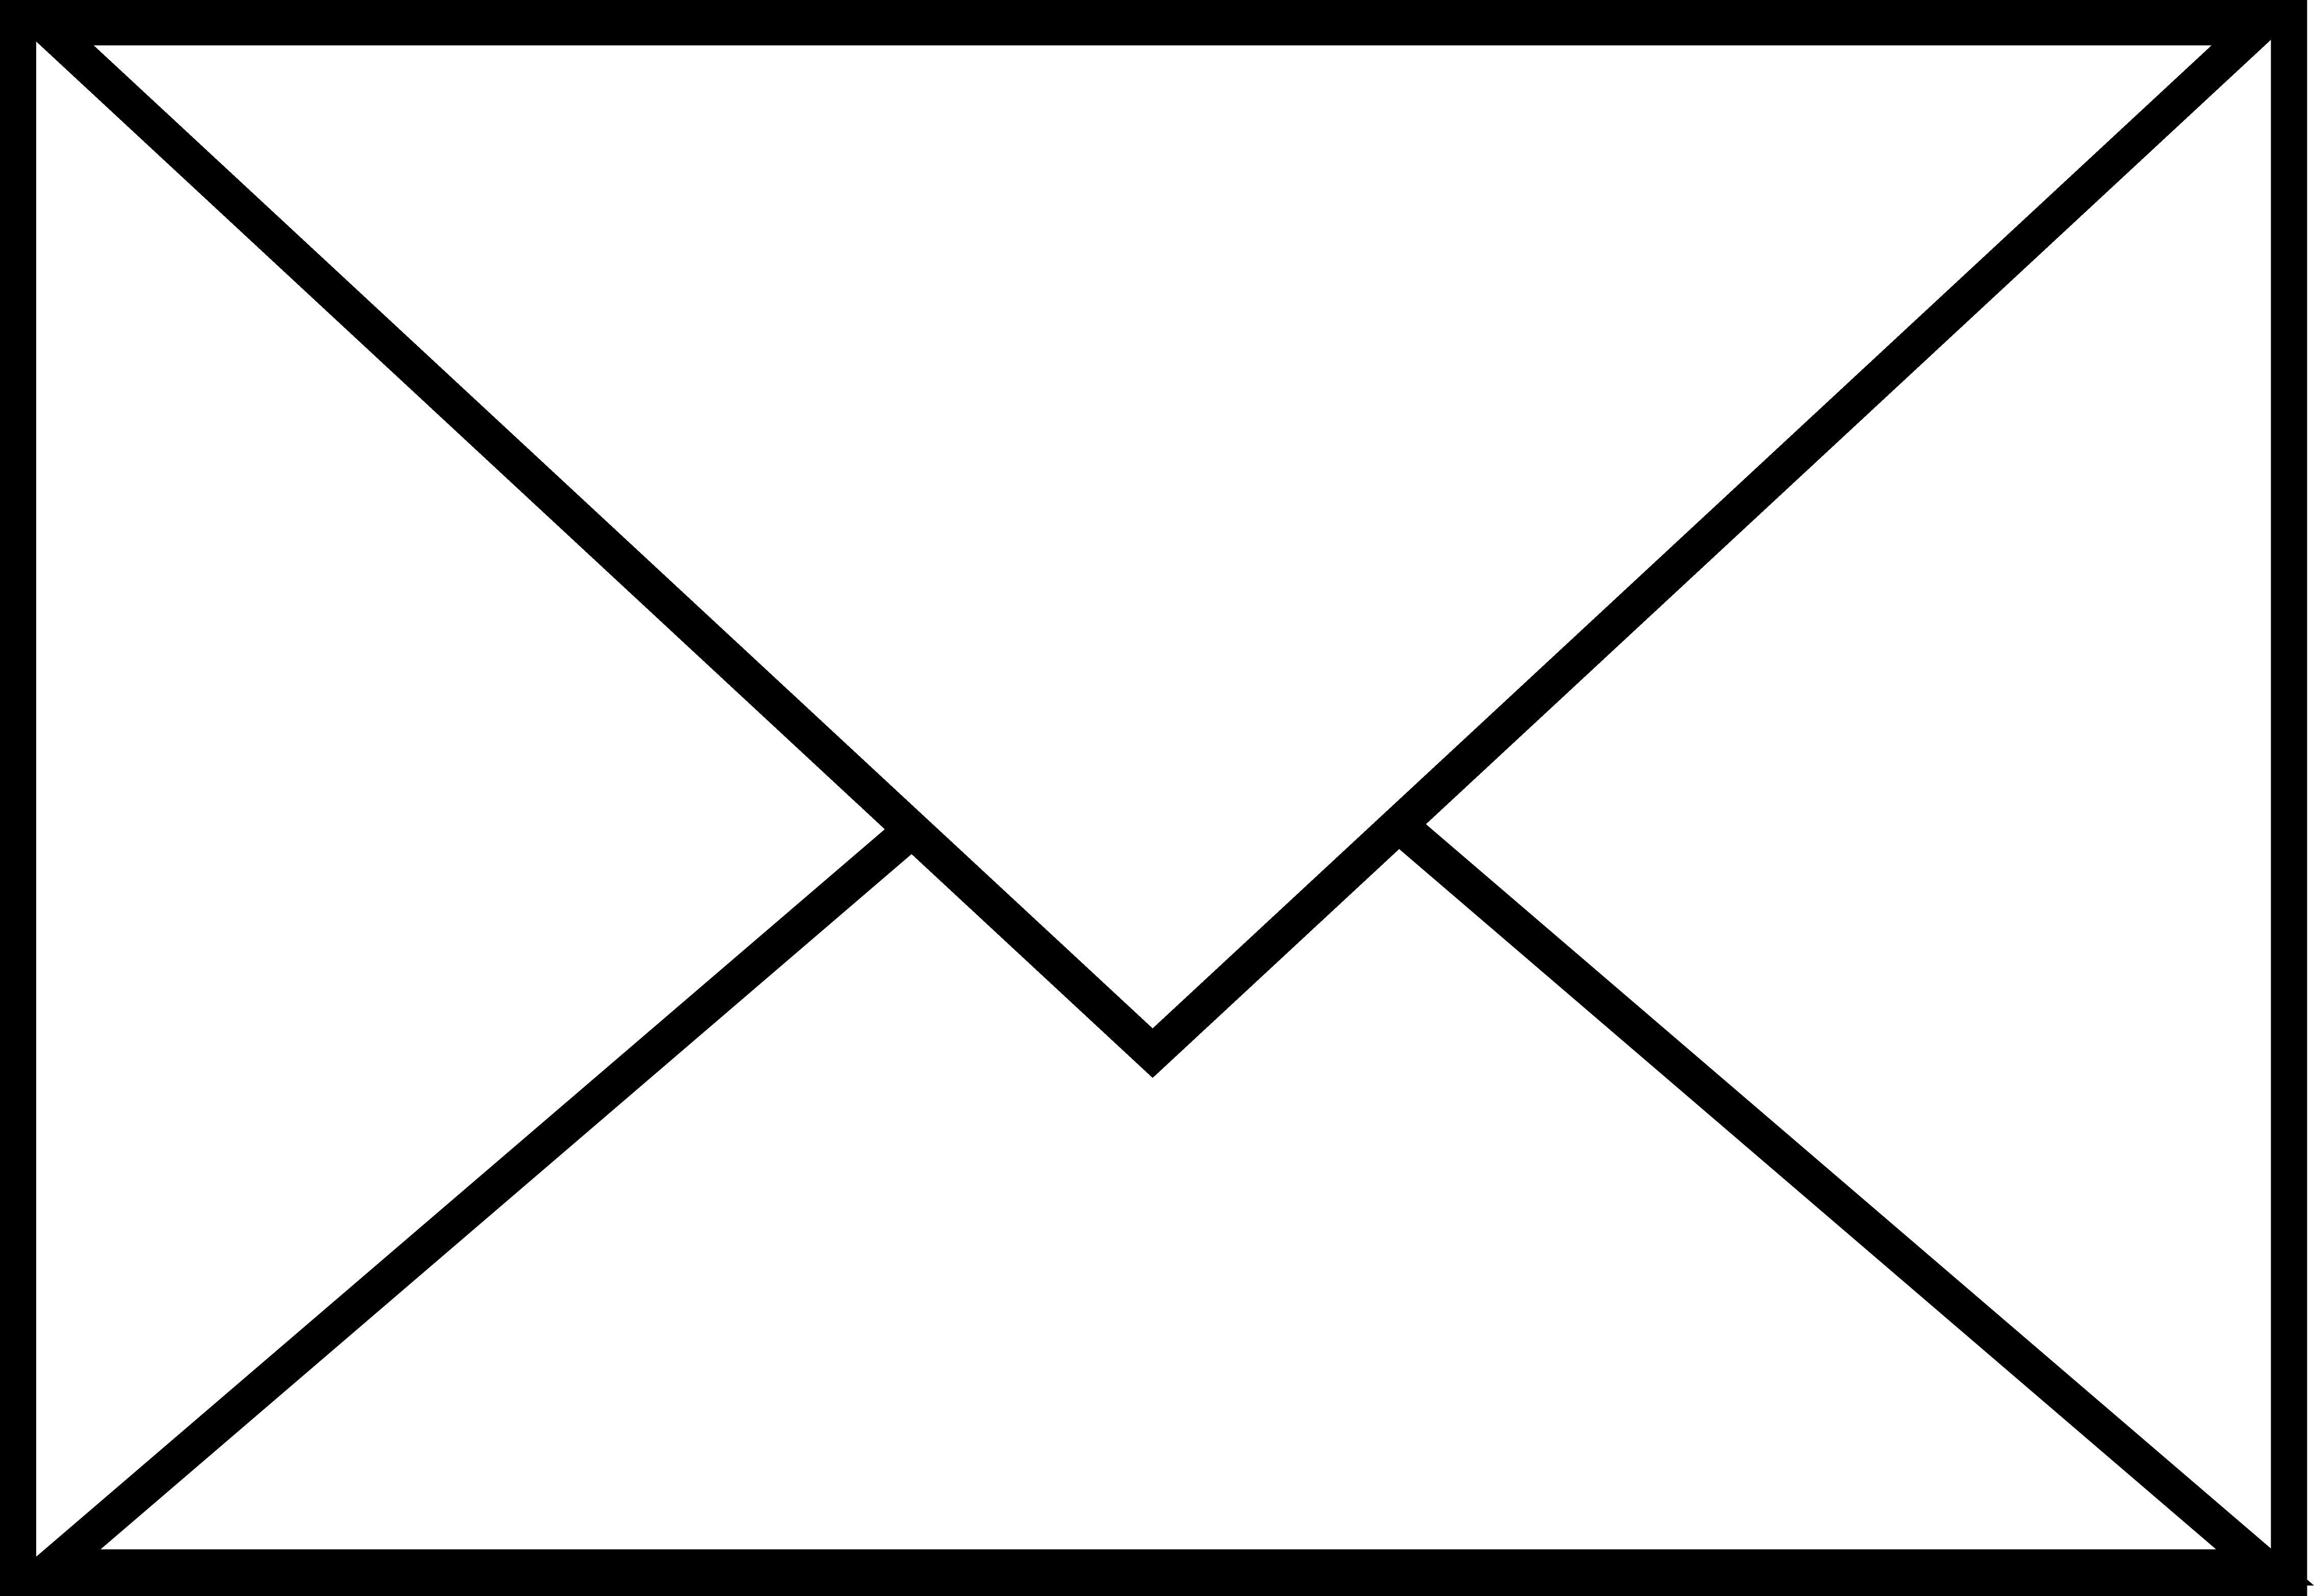 Envelope Icon clip art .